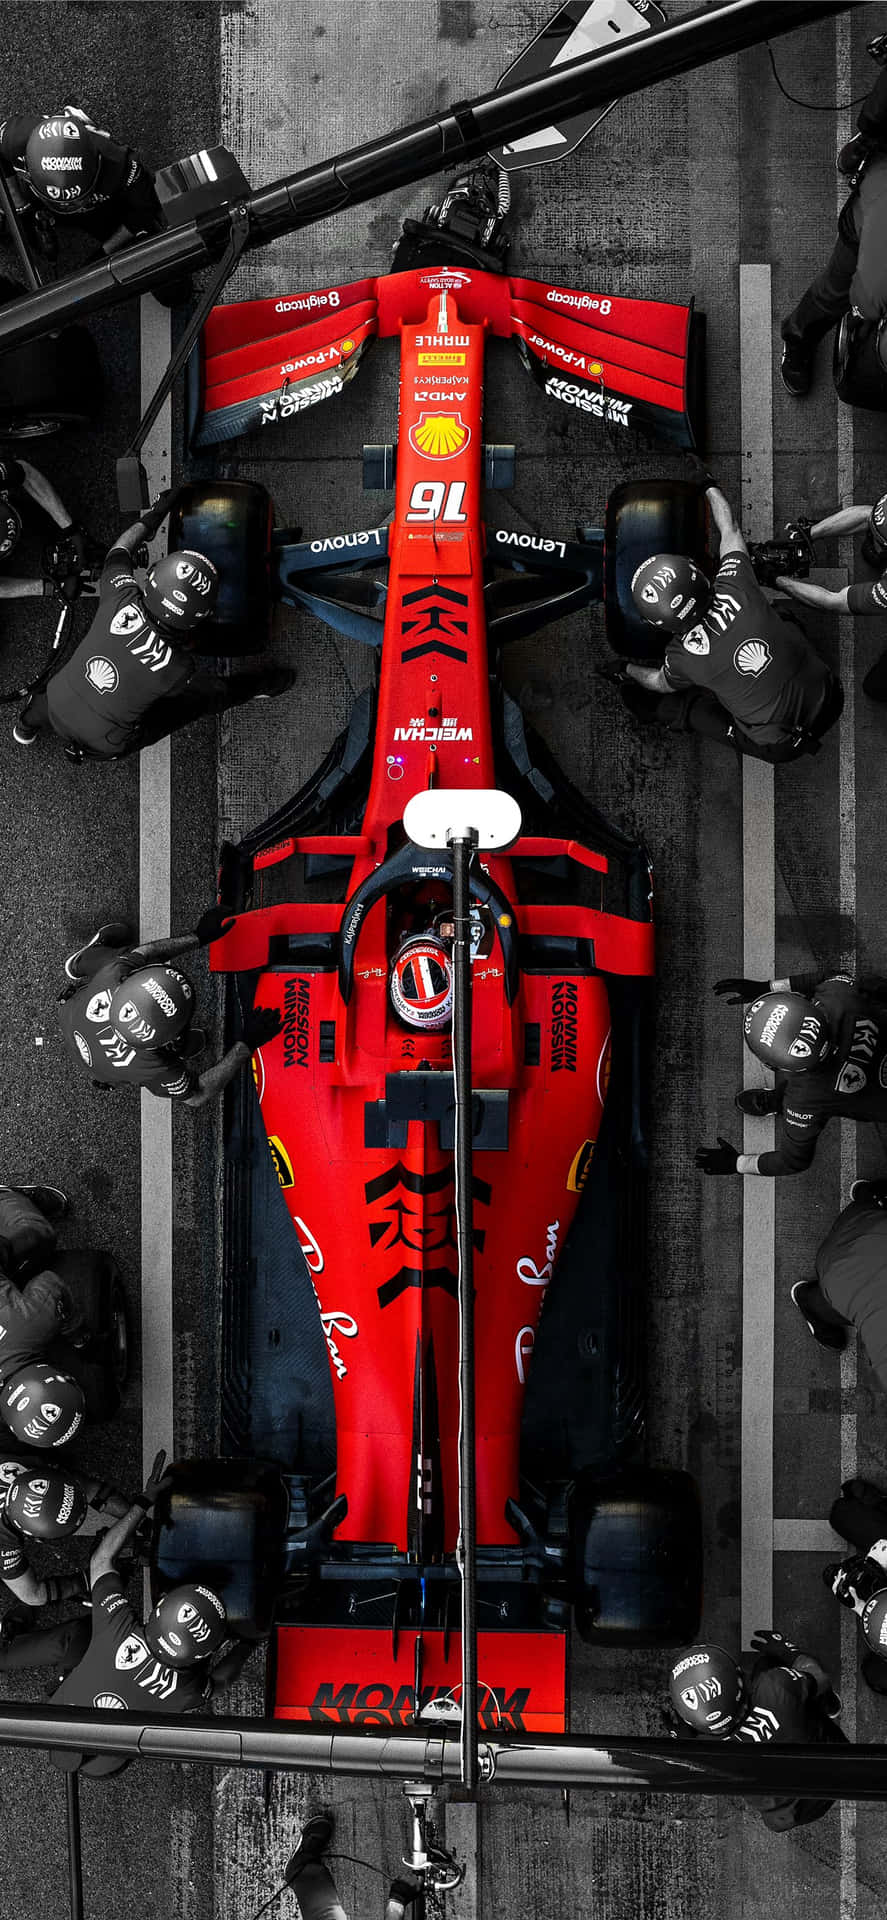 Ferrari F1 Pitstop Overhead View Wallpaper